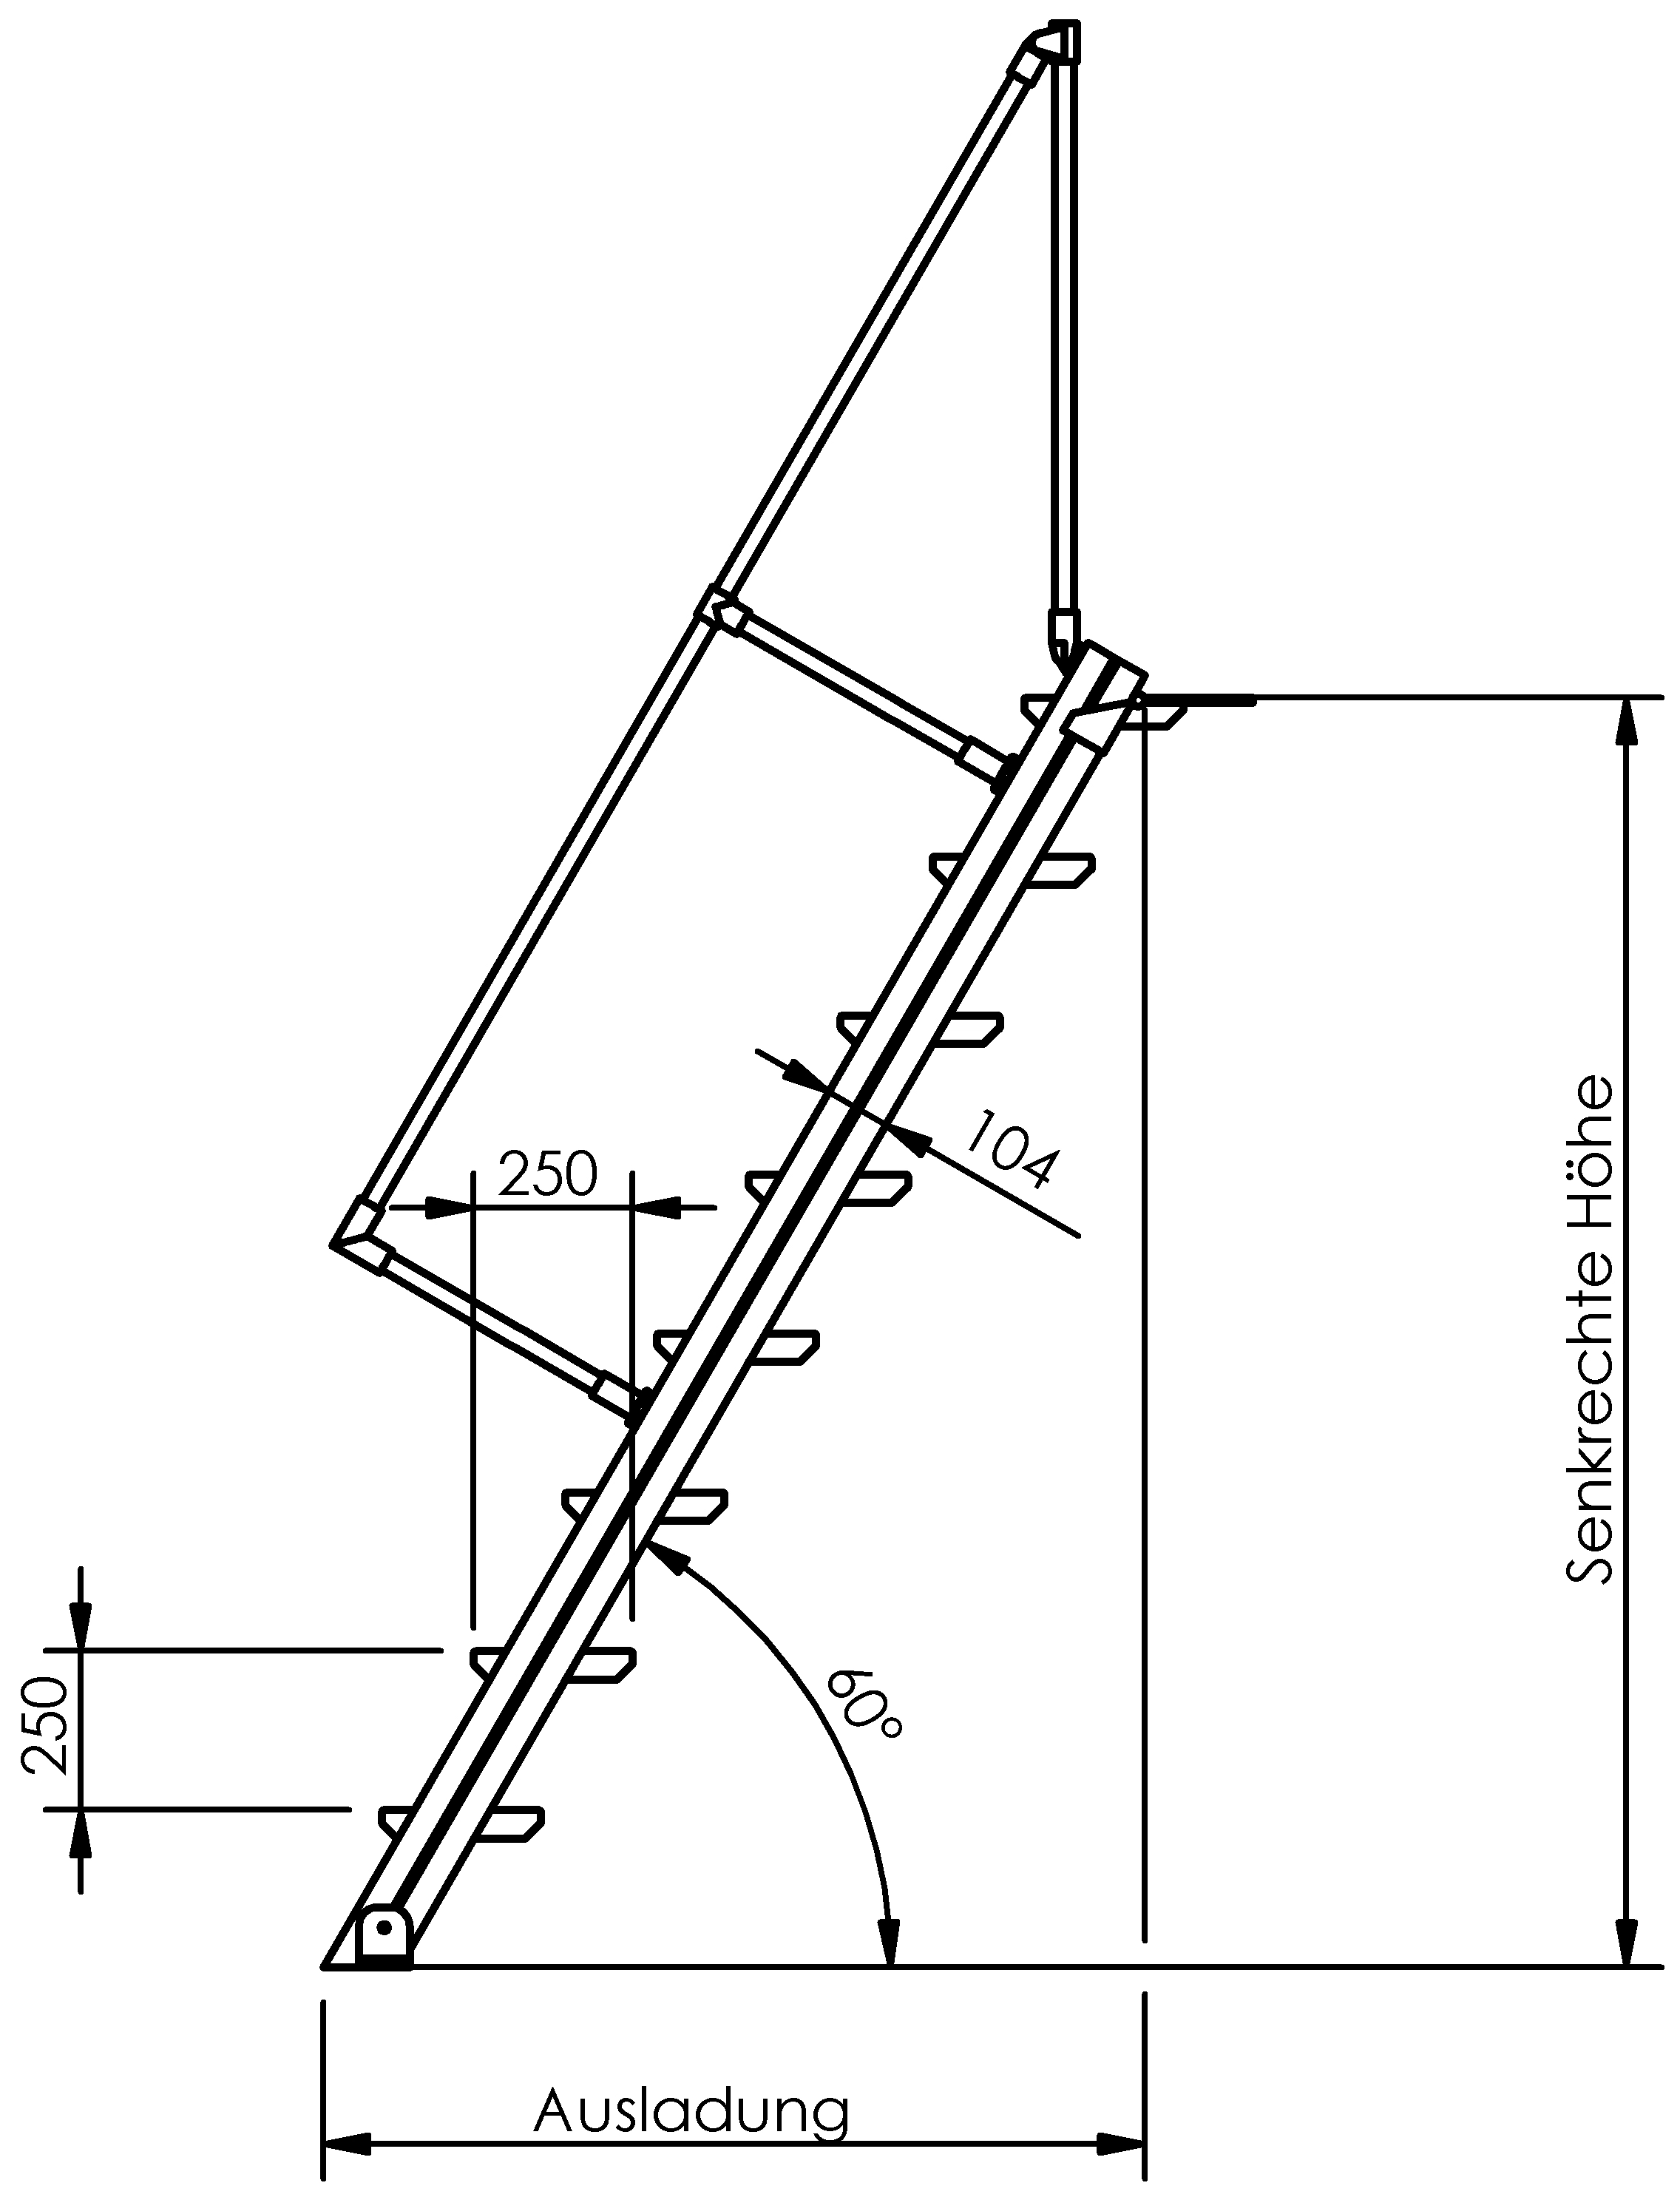 Selbstbautreppen, LW 600mm, Stufen aus Alu, Neigung 45°